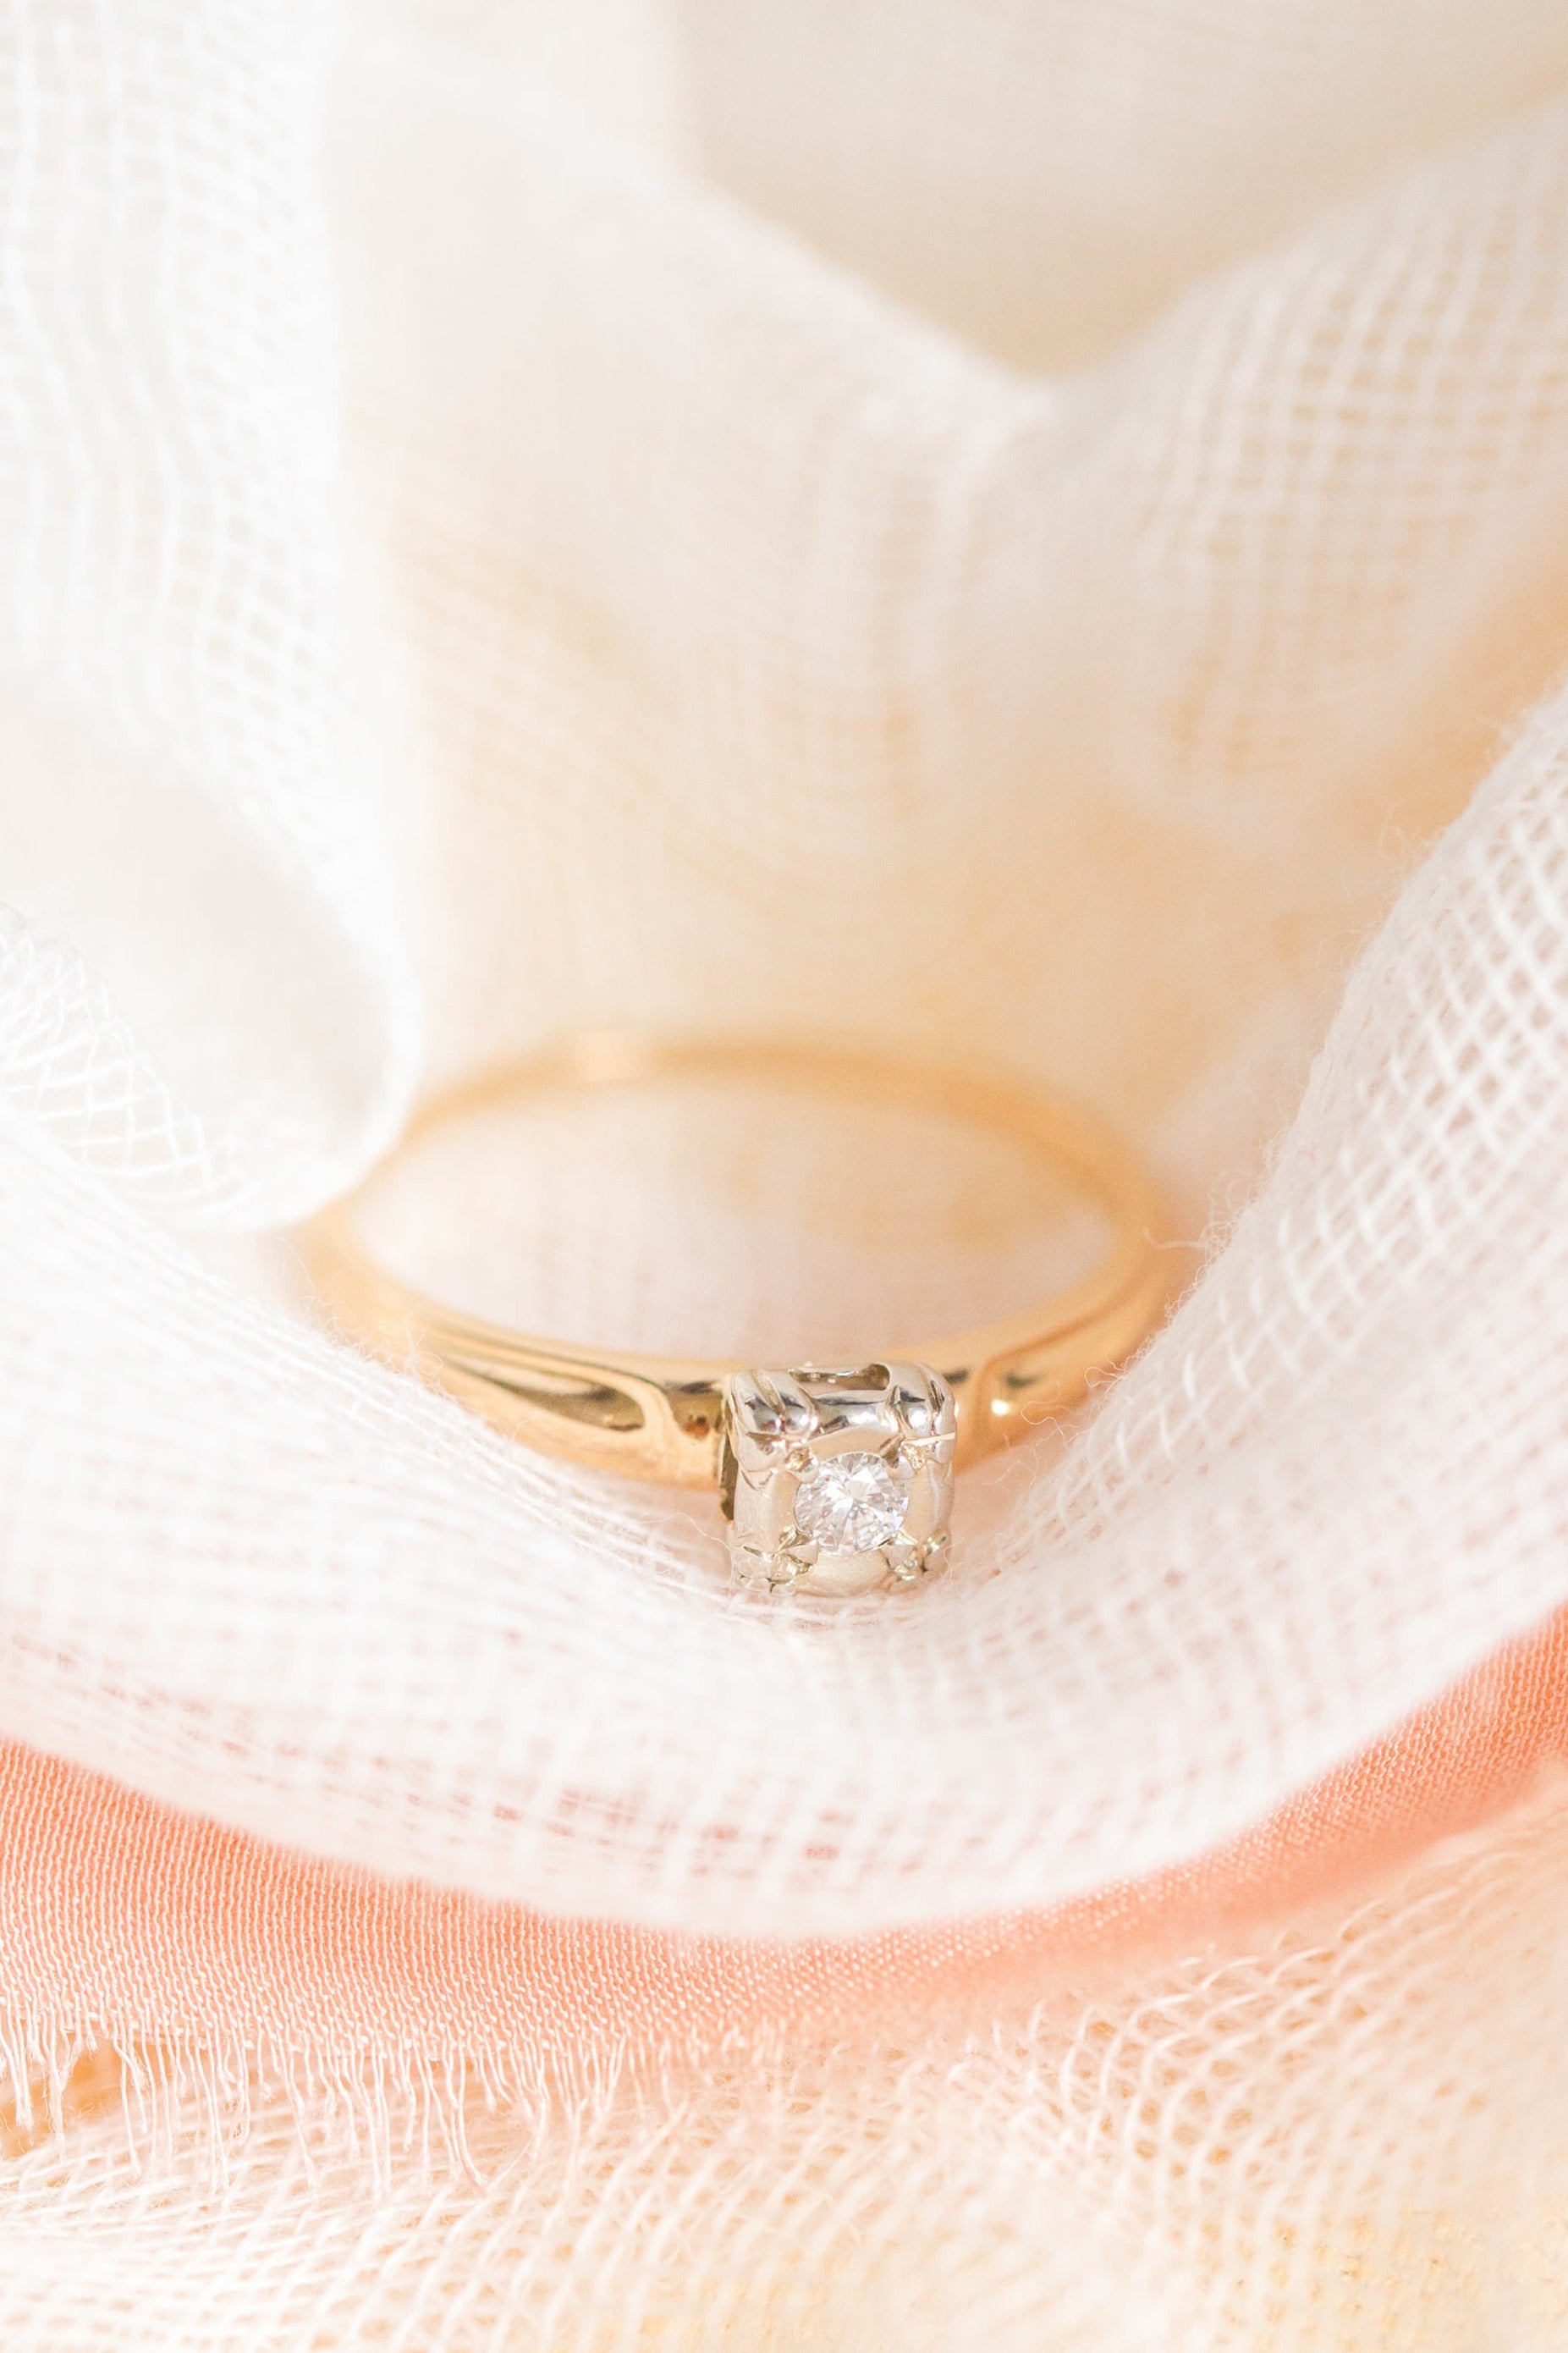 Clara Solitaire Diamond Engagement Ring in 14k Gold c. 1930s Art Deco-1